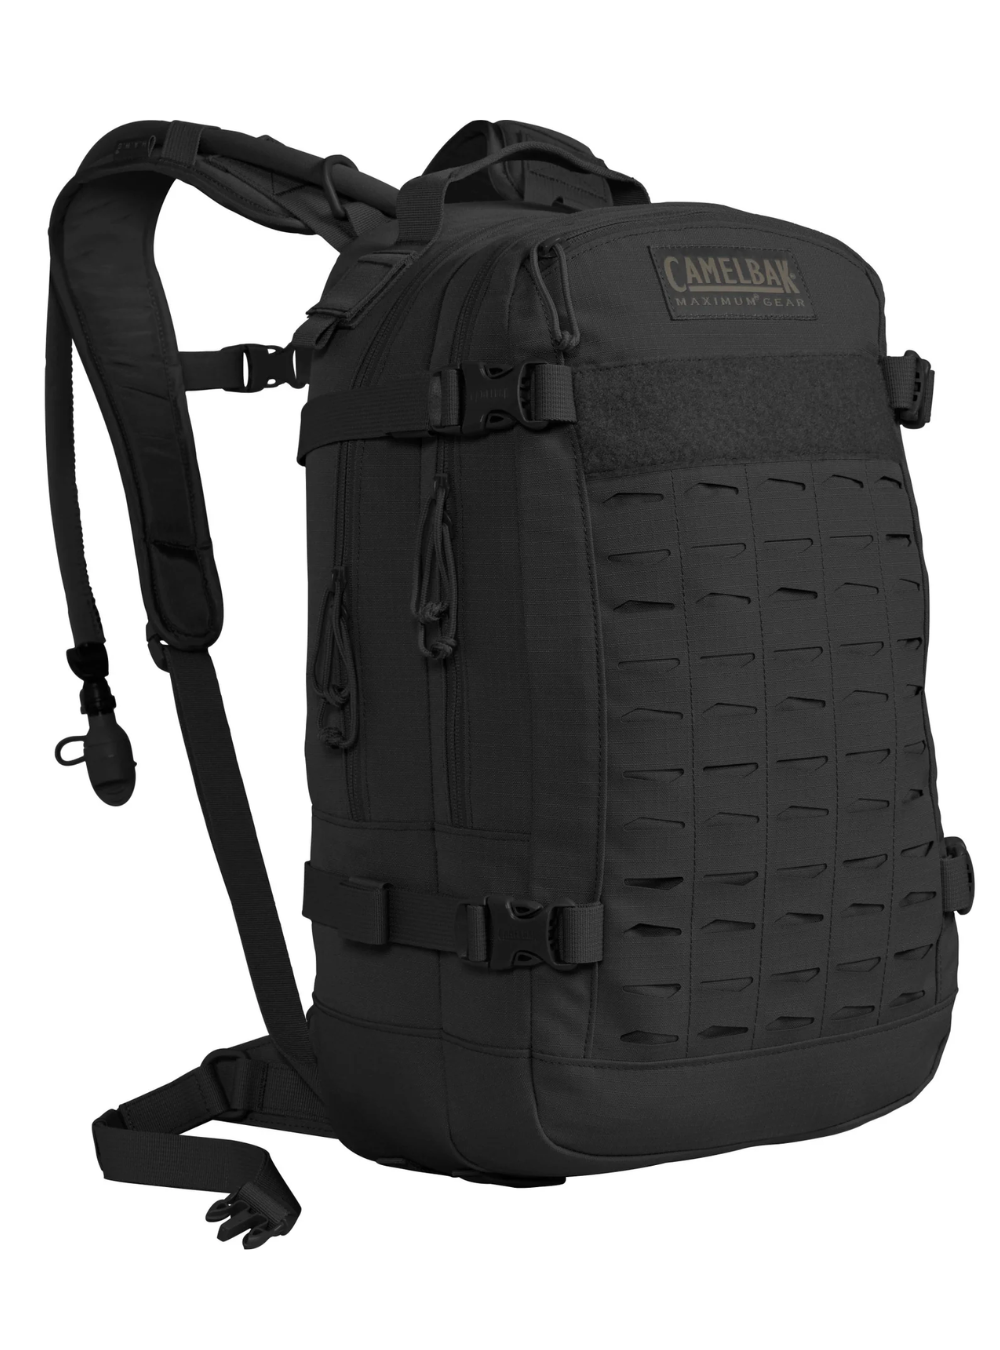 SALE - CamelBak HAWG Milspec Crux Backpack